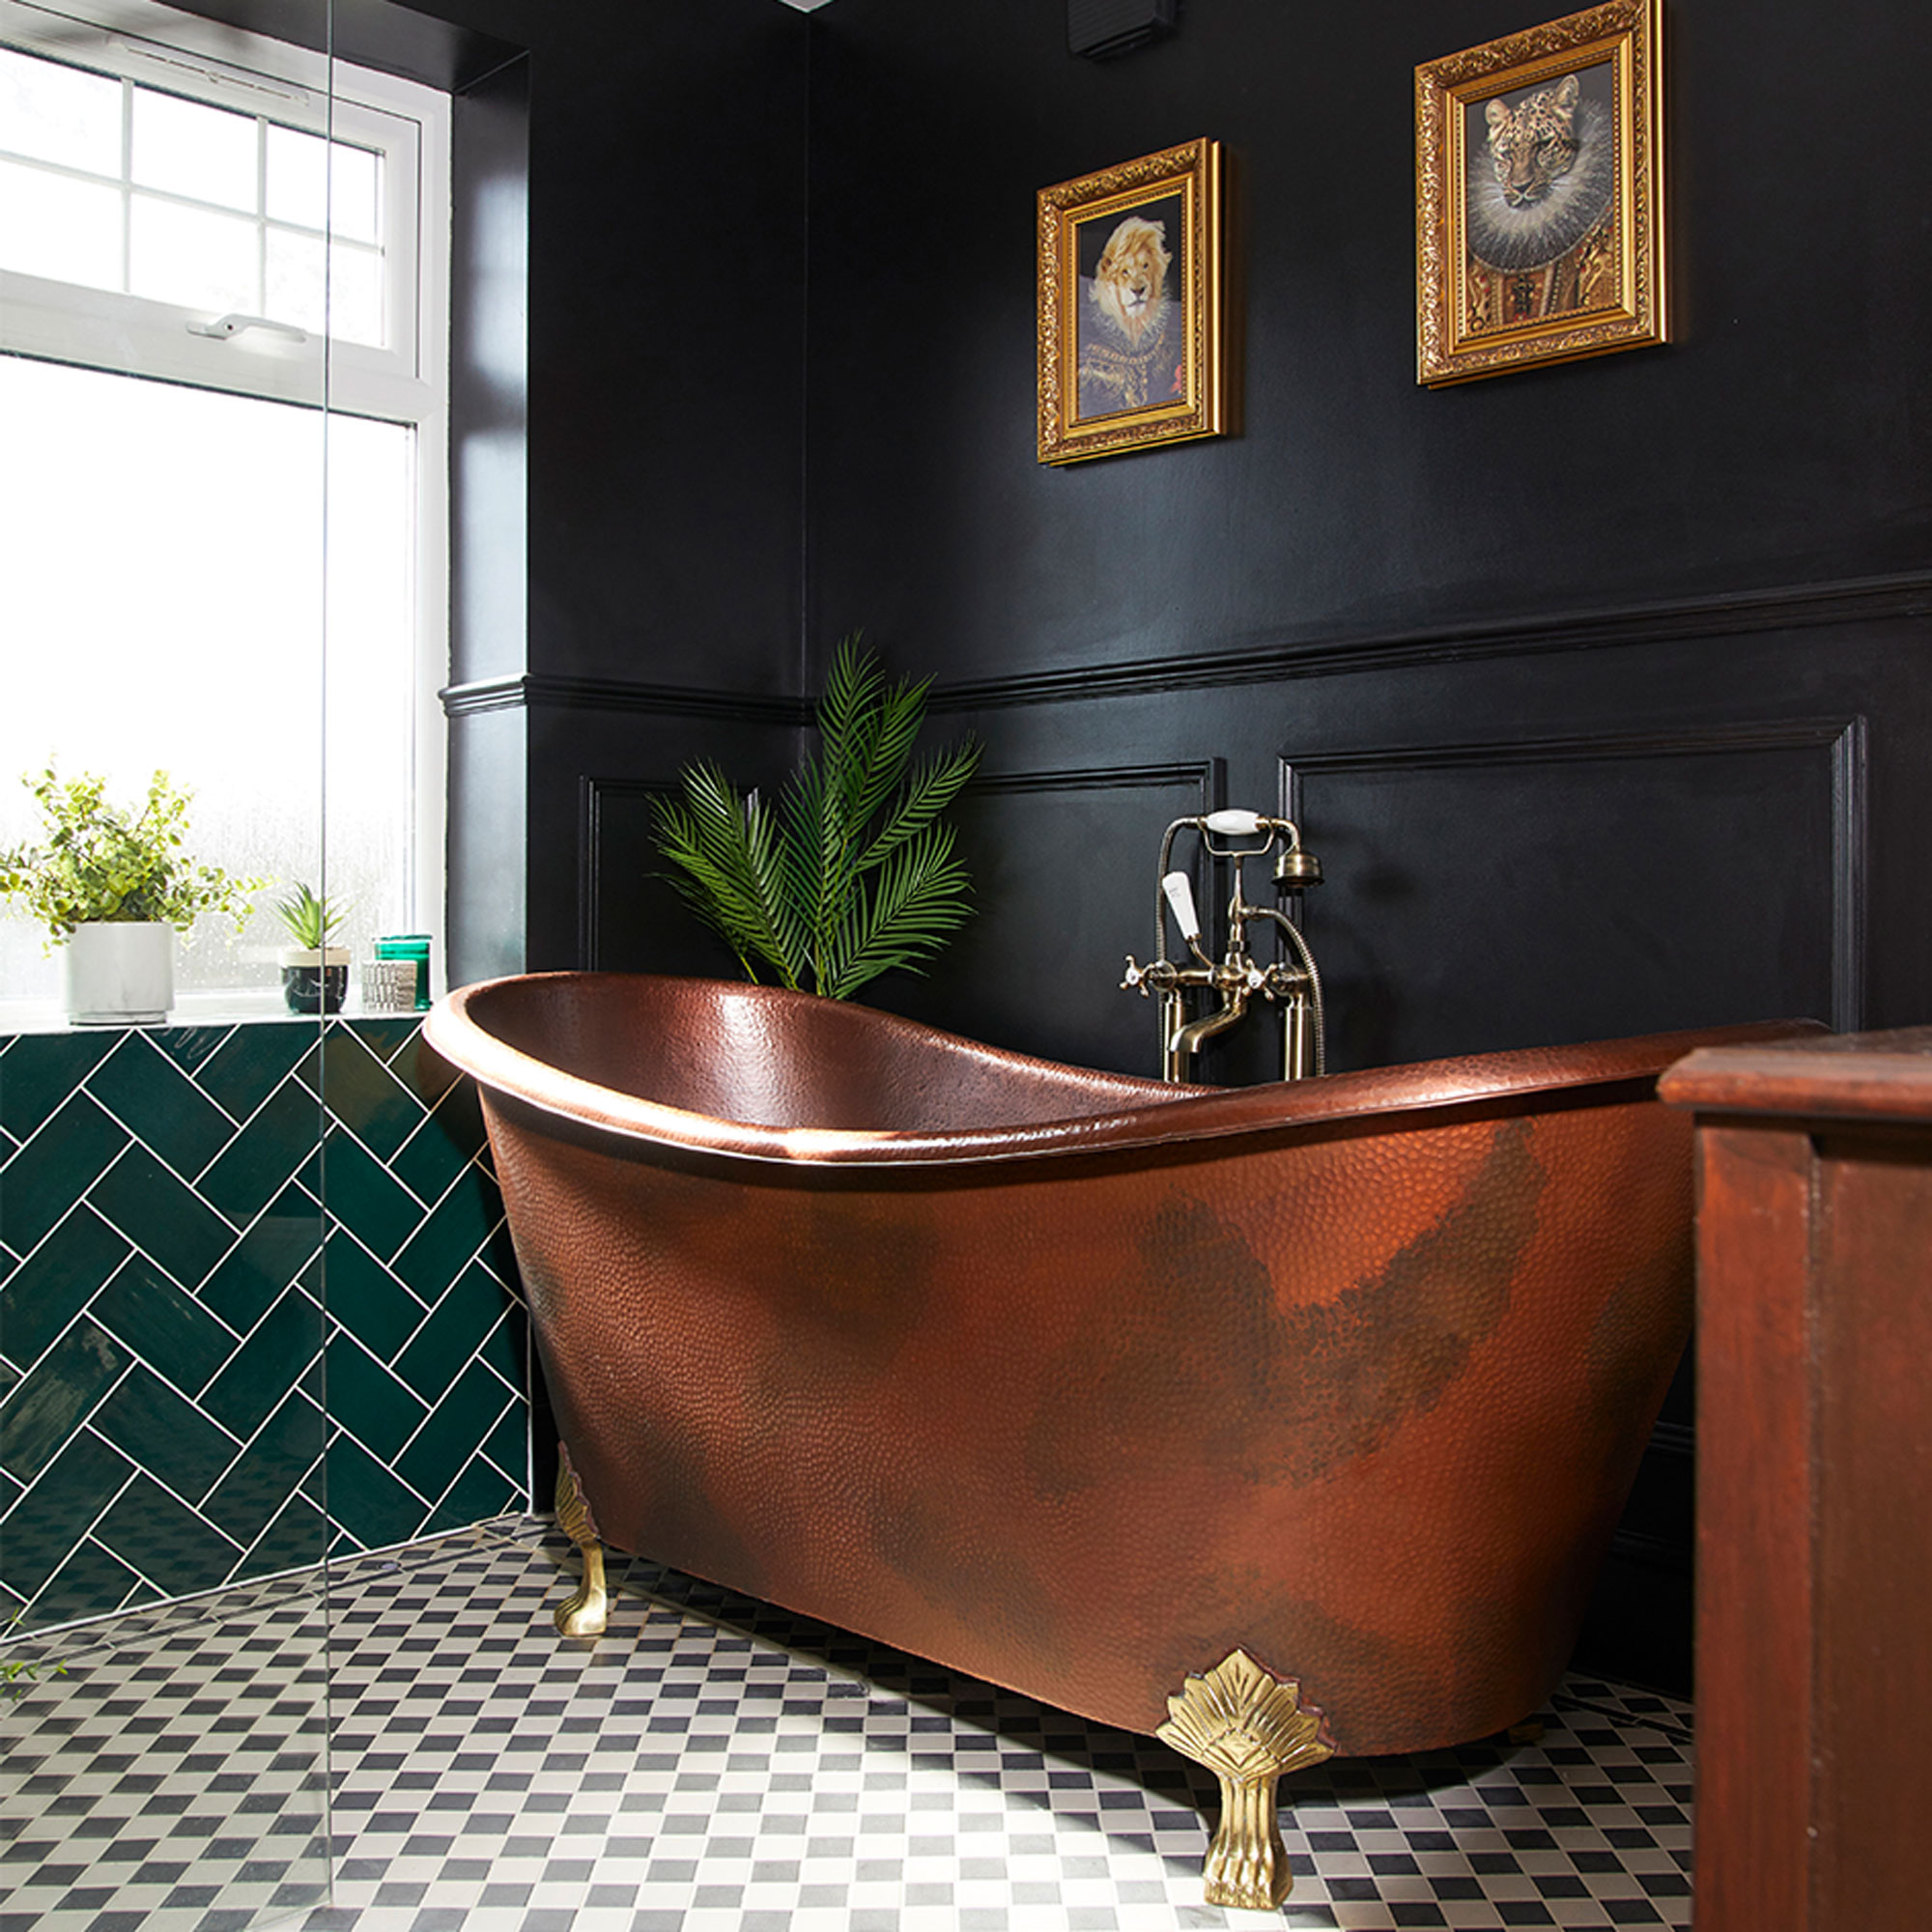 Black bathroom with copper bath and monochrome floor tiles